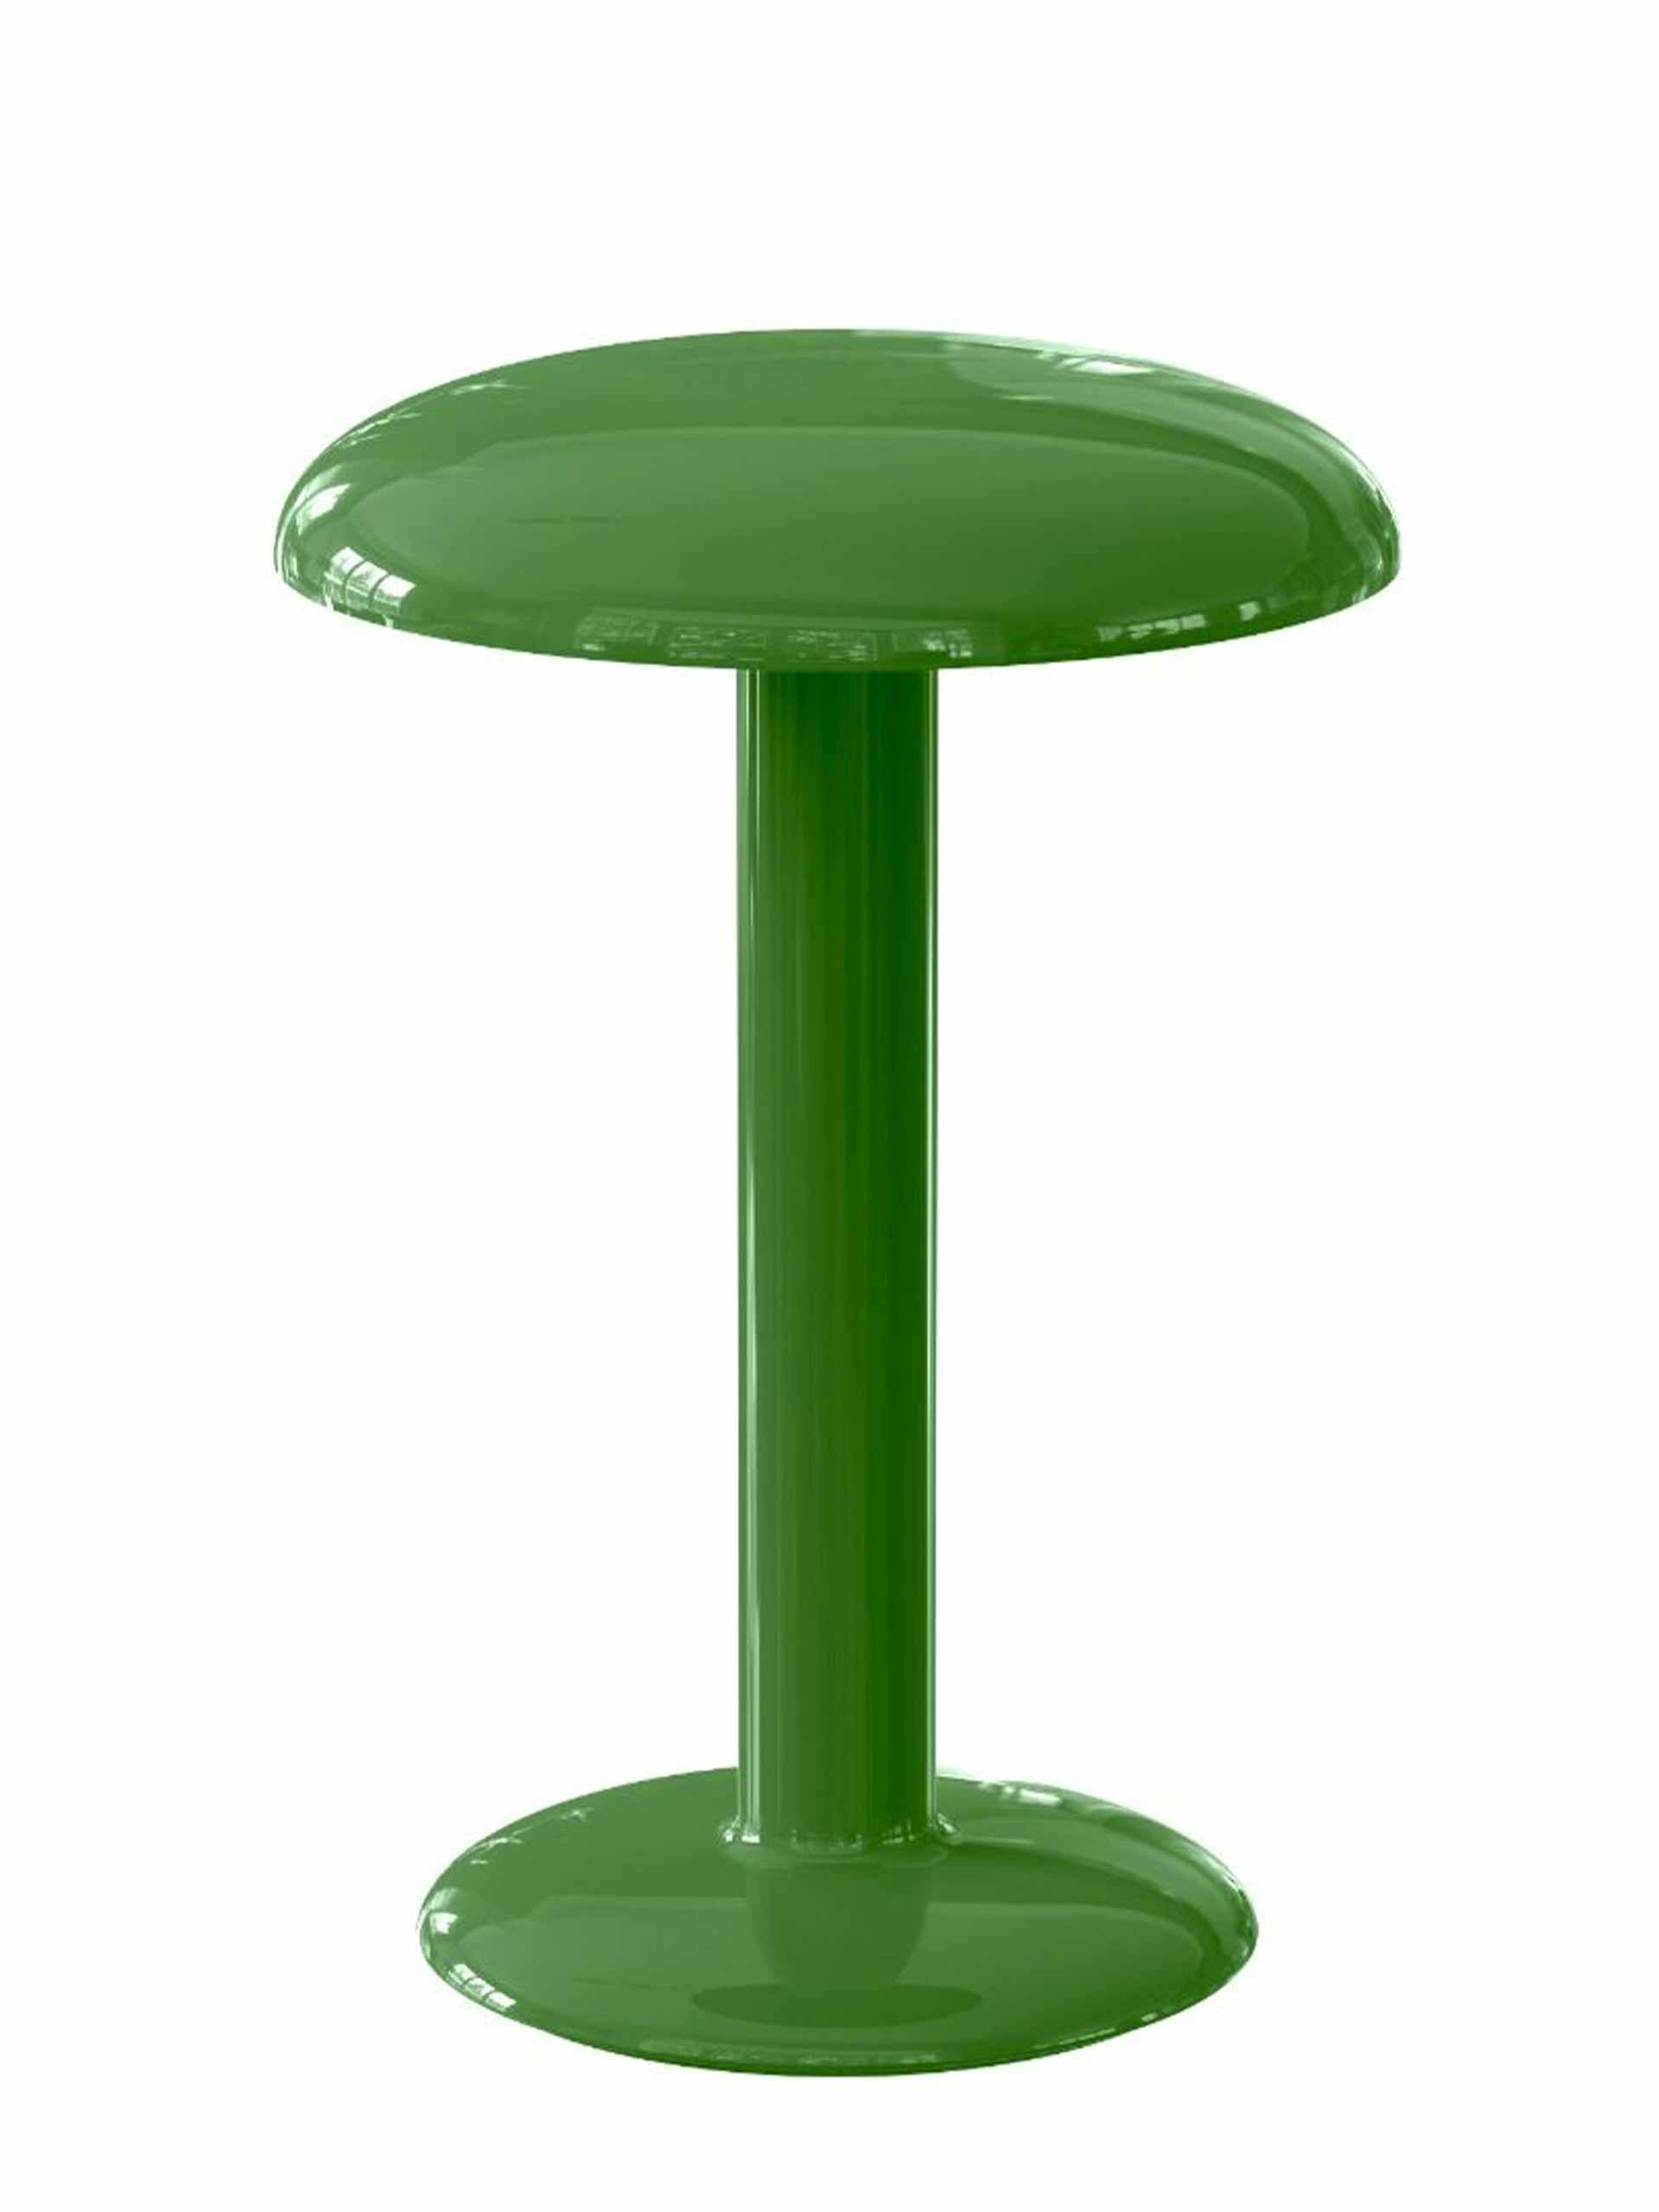 Green side lamp